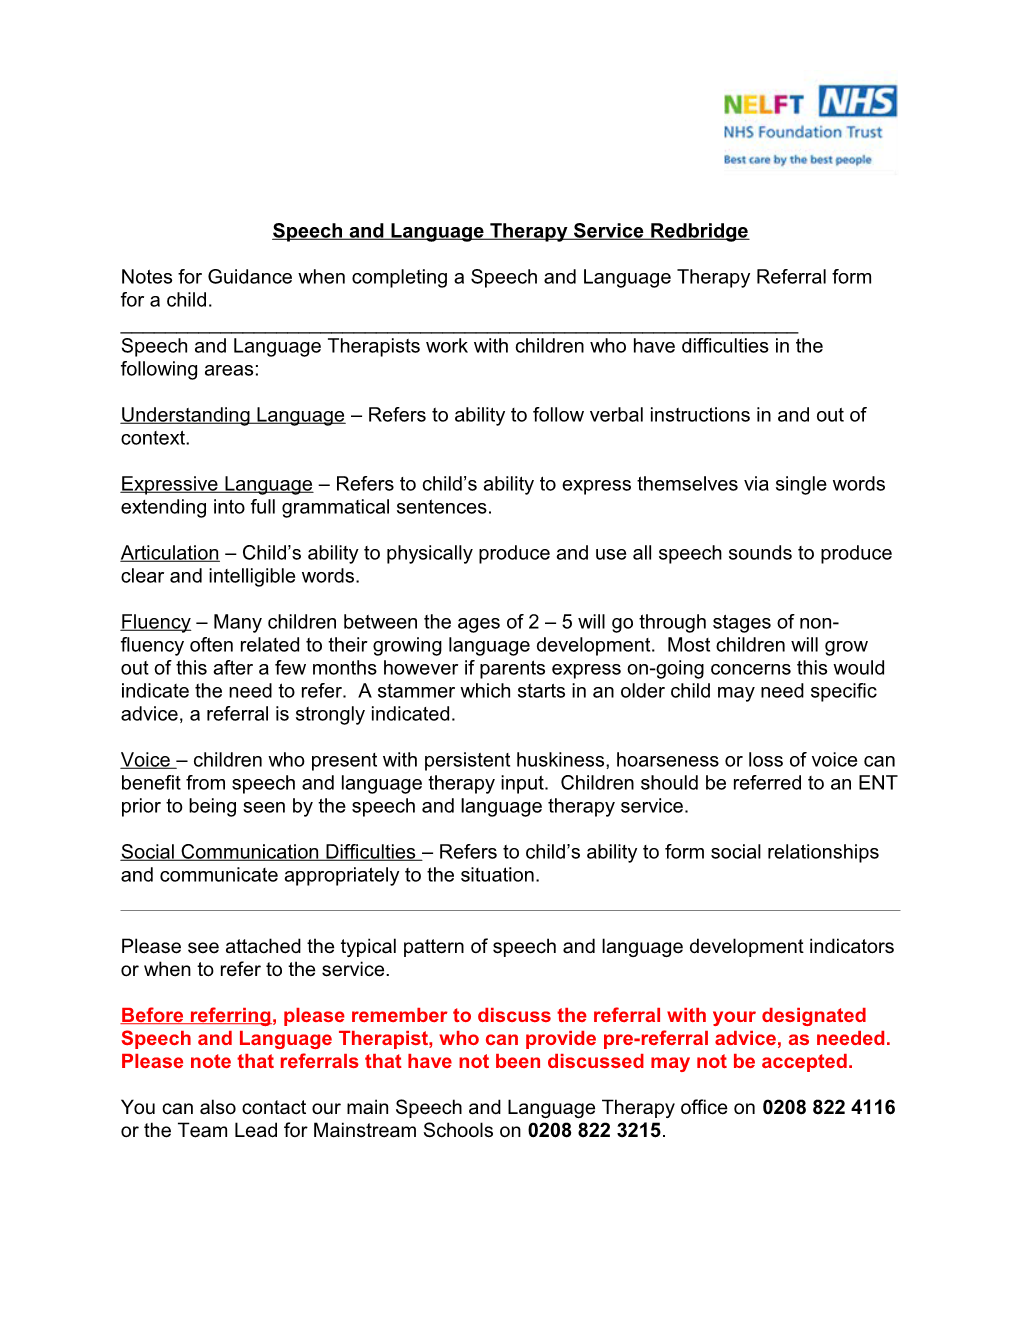 Redbridge Primary Care Trust Speech & Language Therapy Service